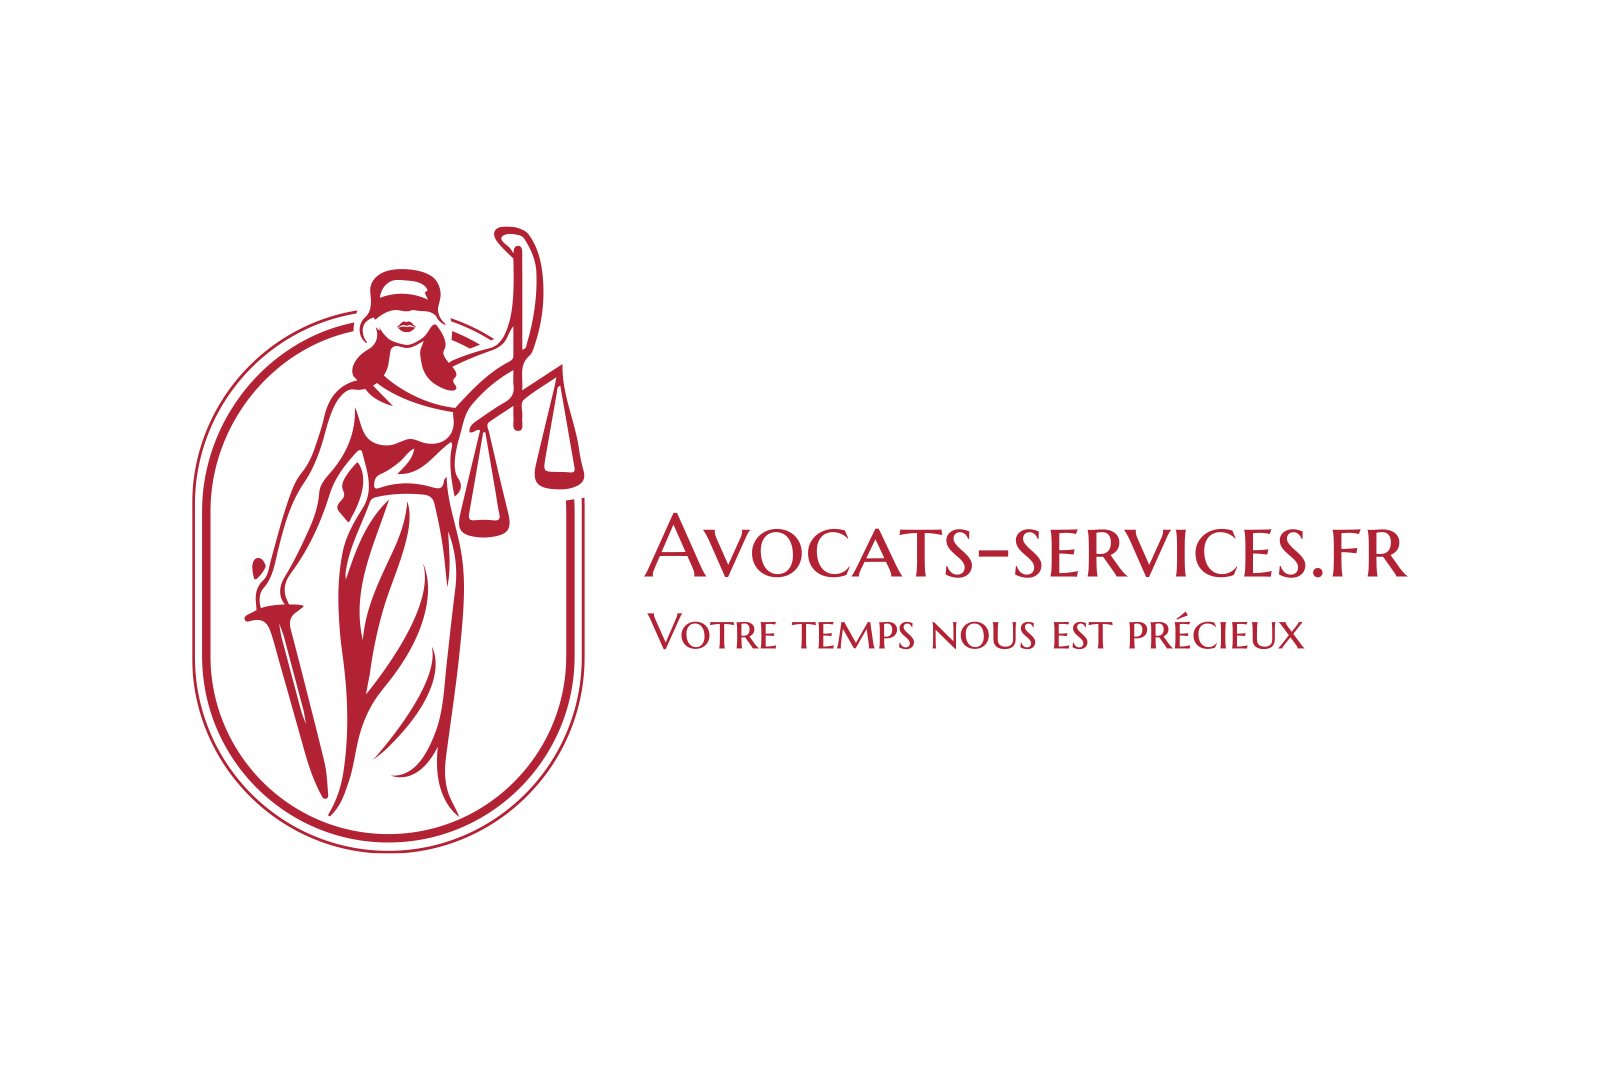 avocats-services.fr - vignette2 - logo, webdesign - infografika.com